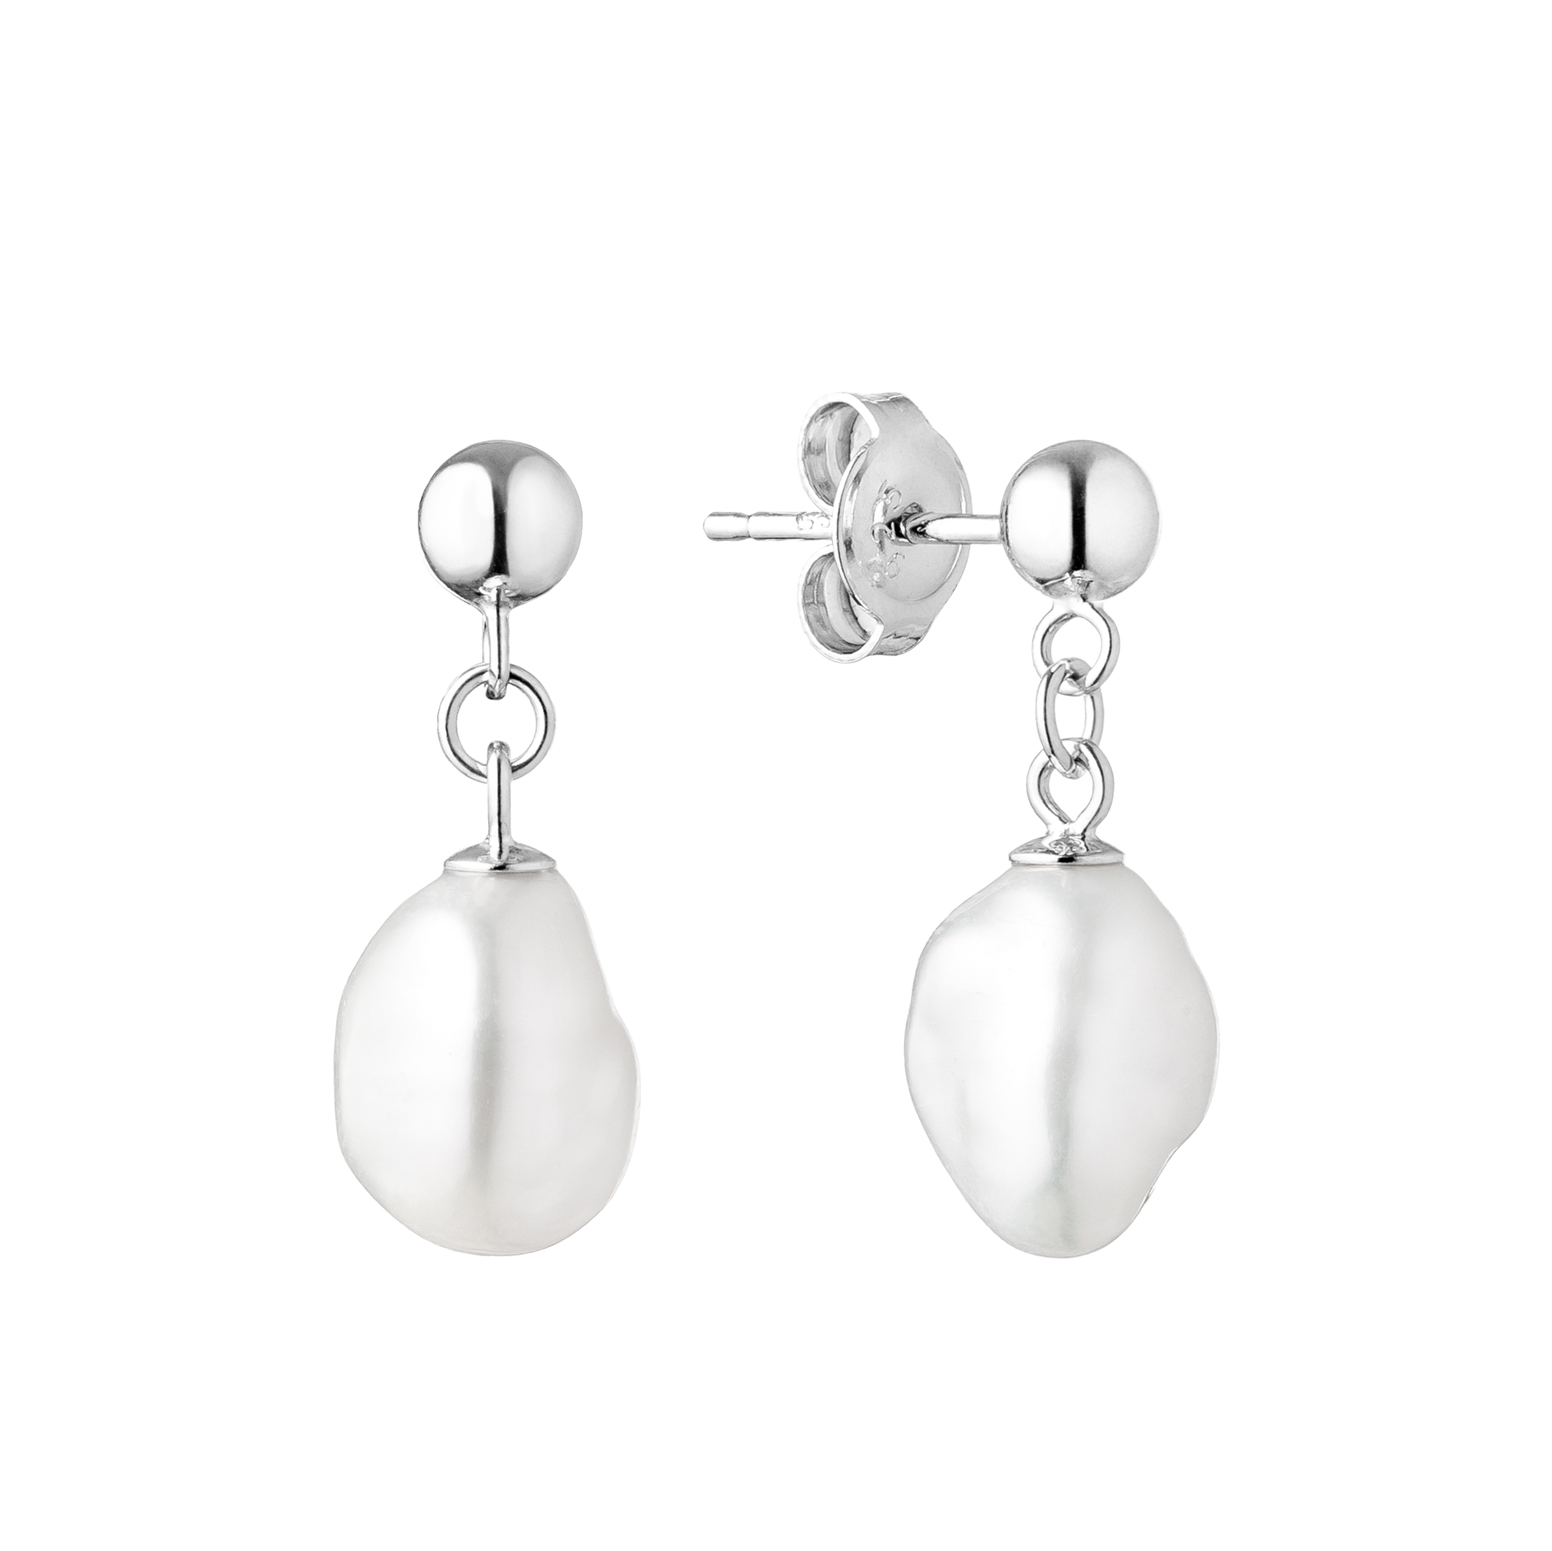 Perlové náušnice - nepravidelné prírodné perly